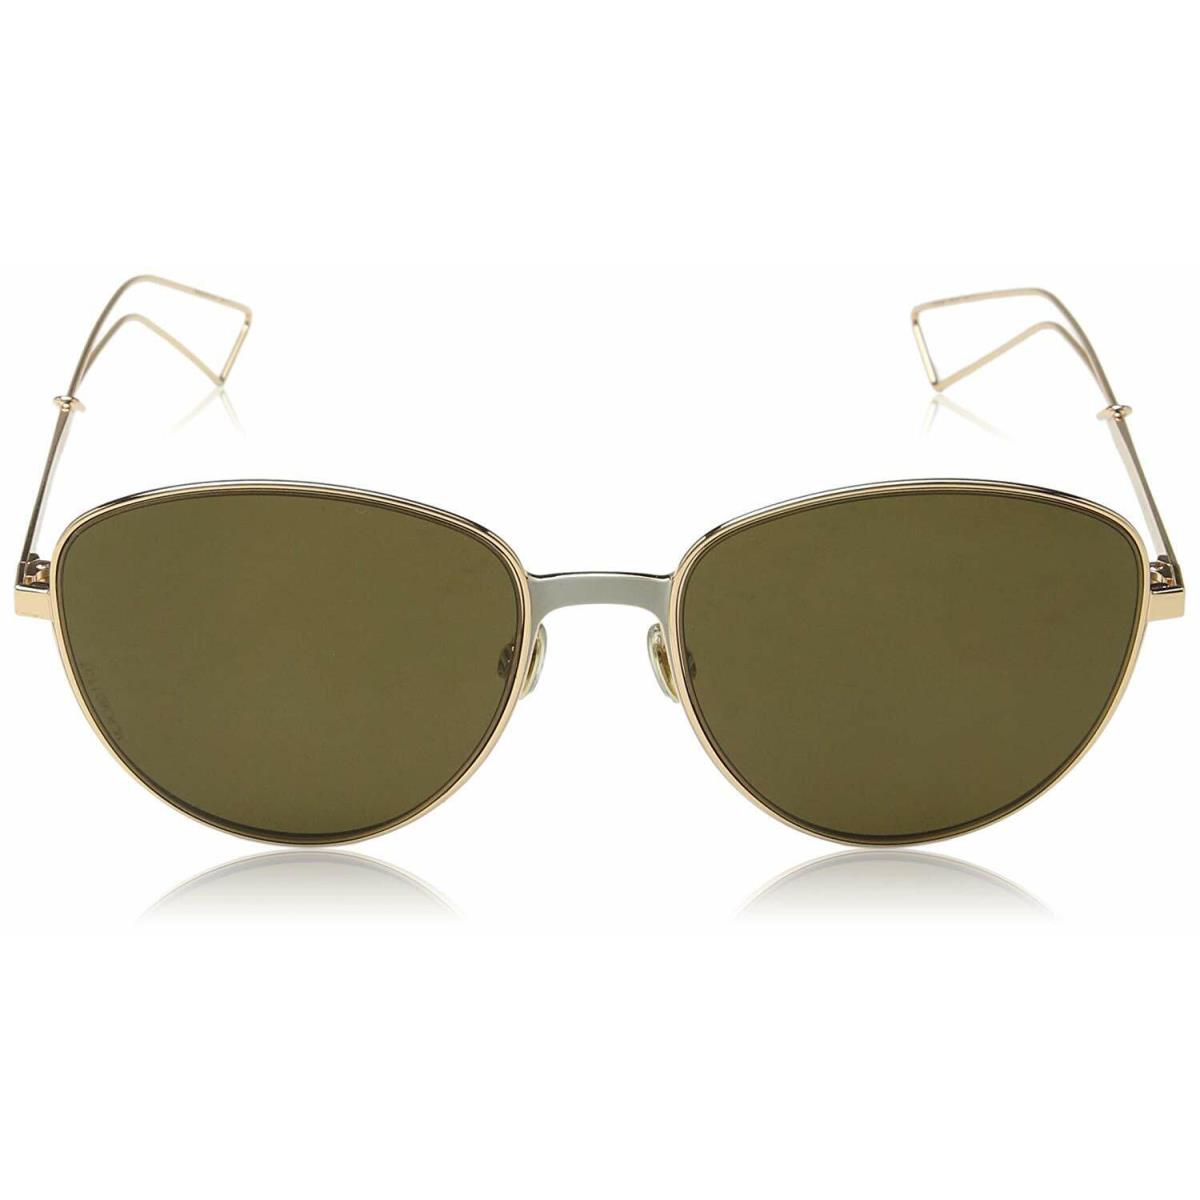 Dior sunglasses ULTRASRCXEC - Gray , Gold/ Matte Gray Frame, Brown Lens 0